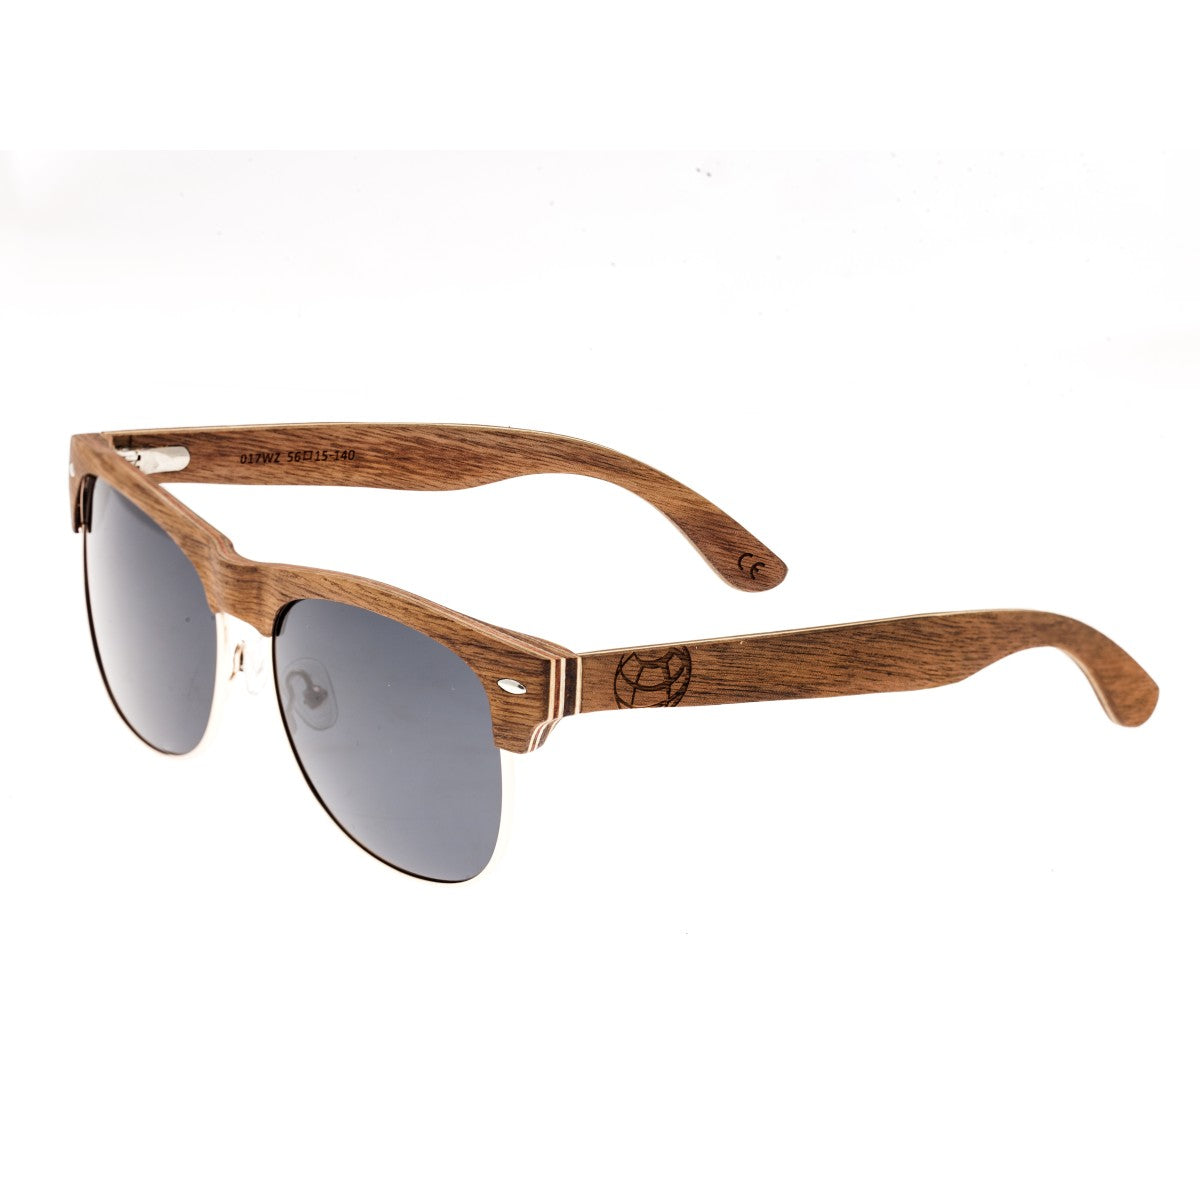 Earth Wood Moonstone Polarized Sunglasses - Walnut-Zebra/Black - ESG017WZ